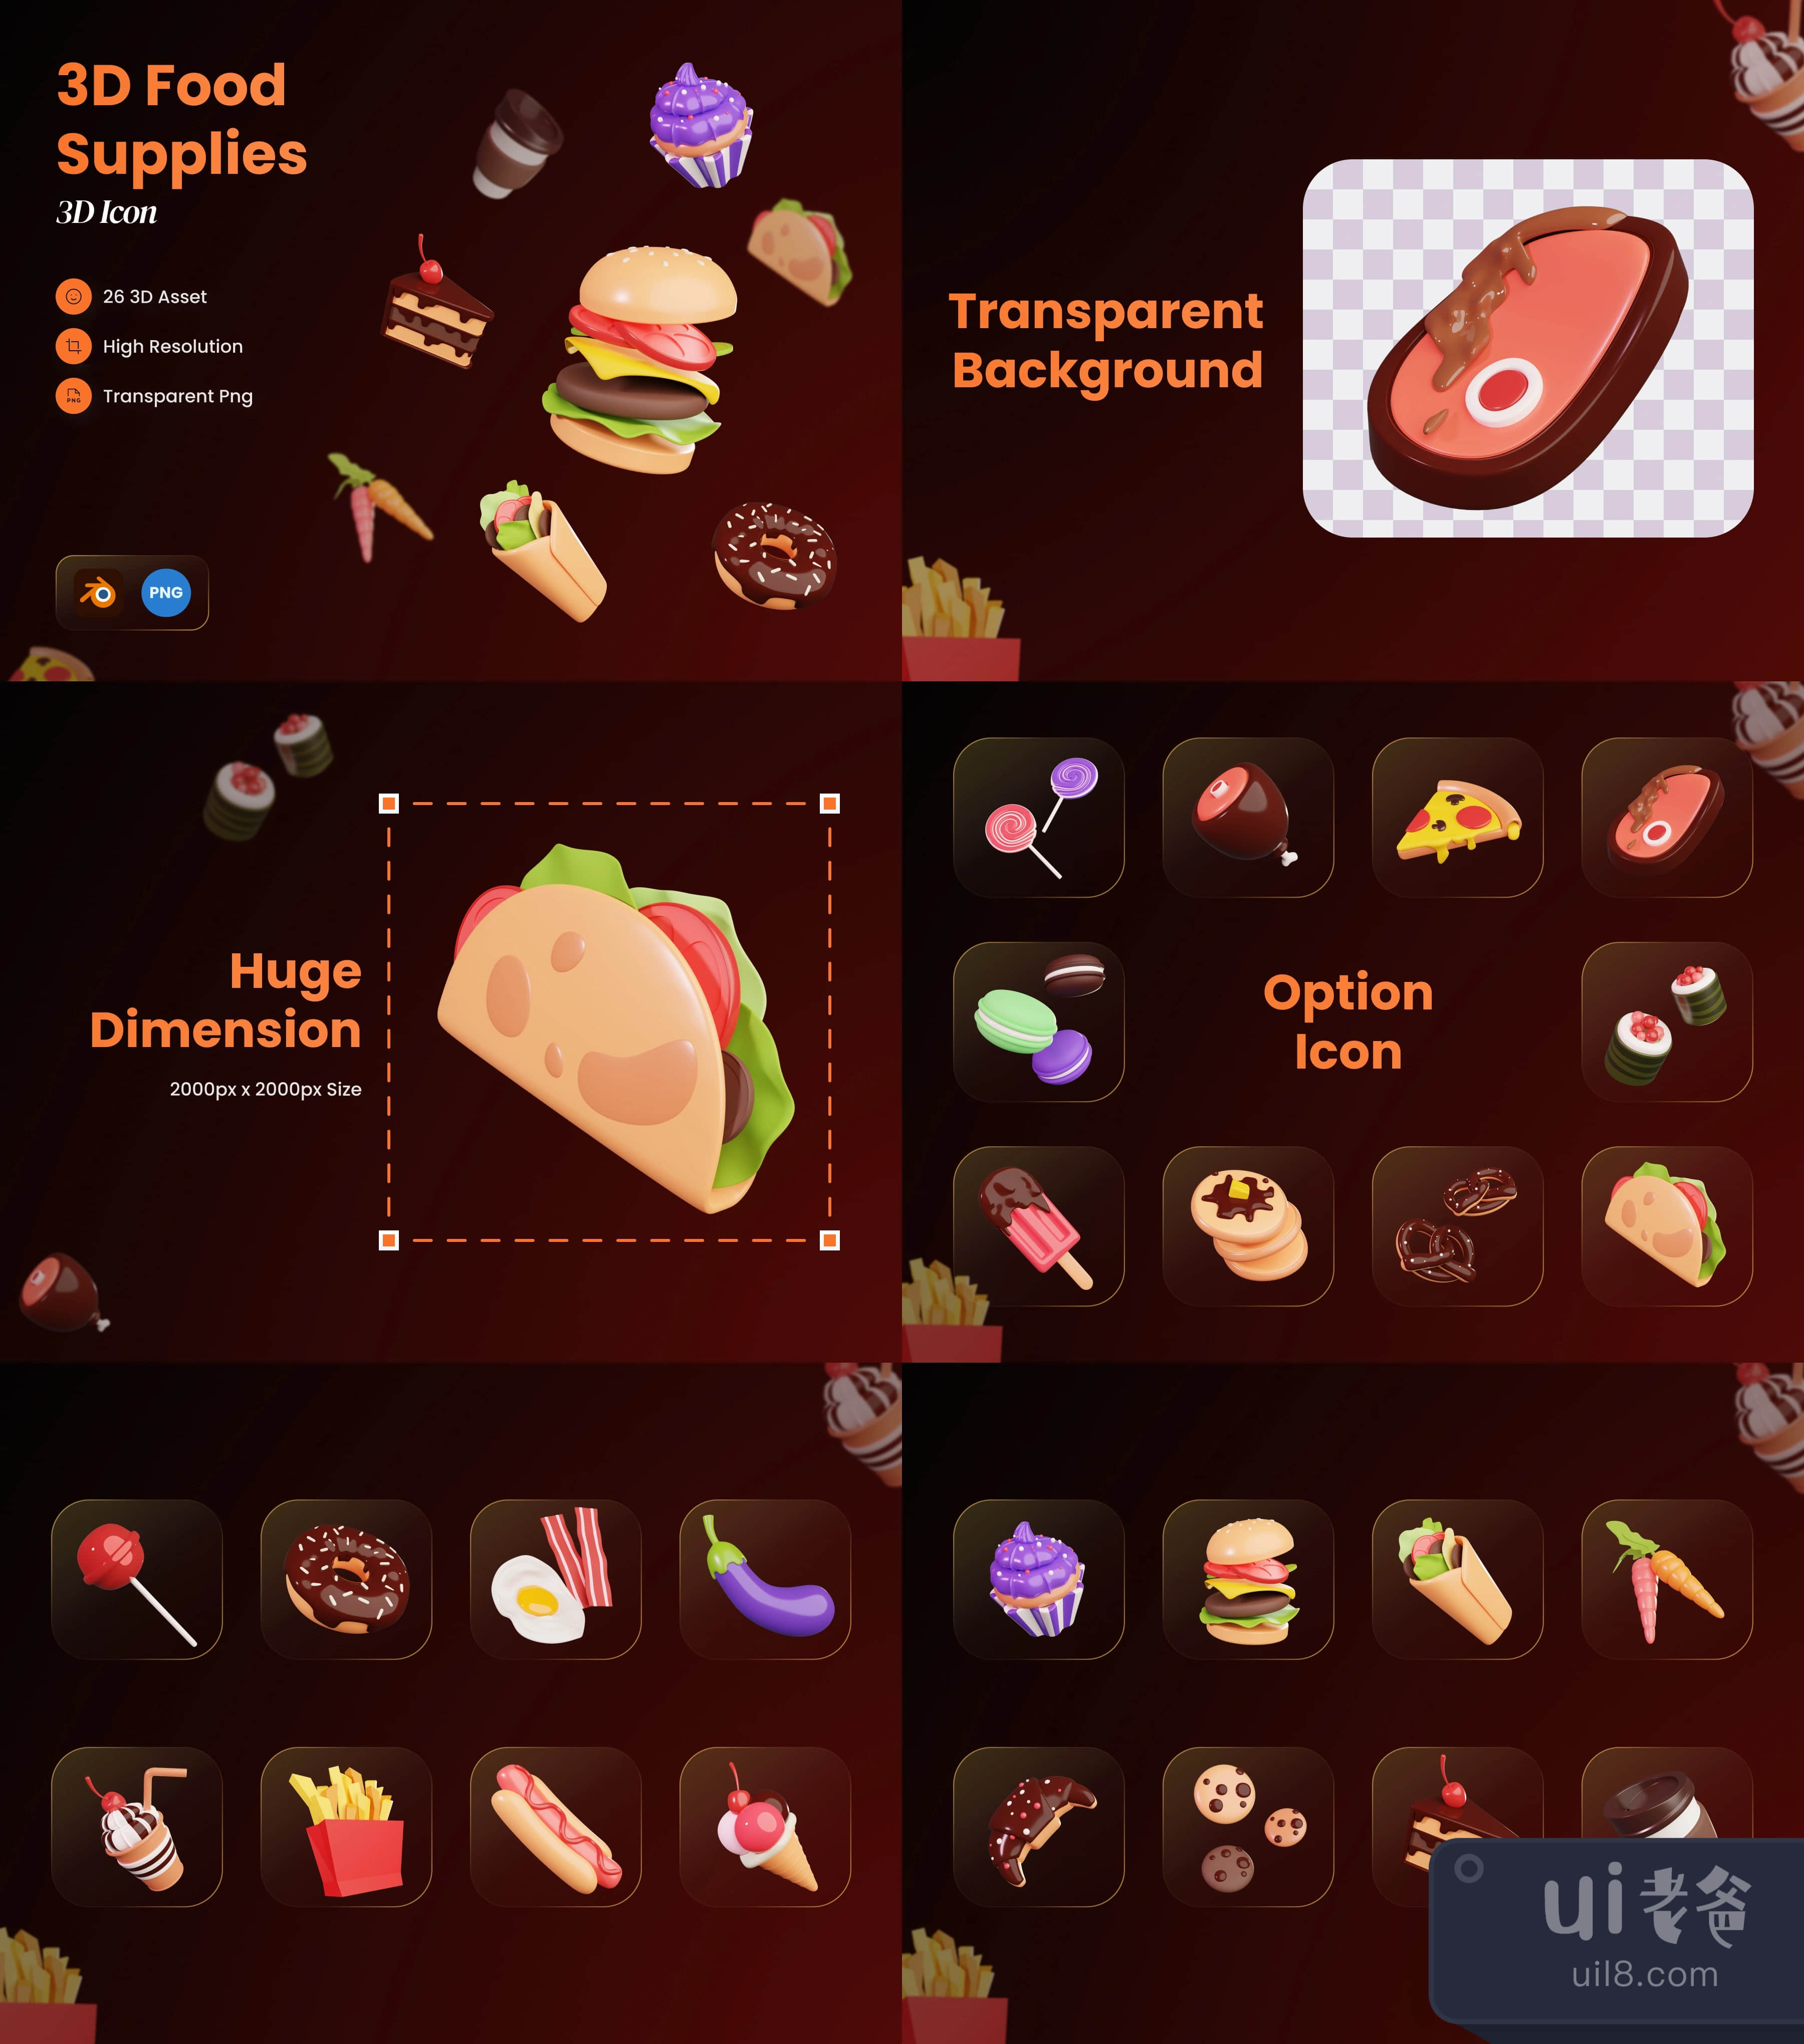 食品供应3D图标 (Food Supplies 3D Icons)插图1